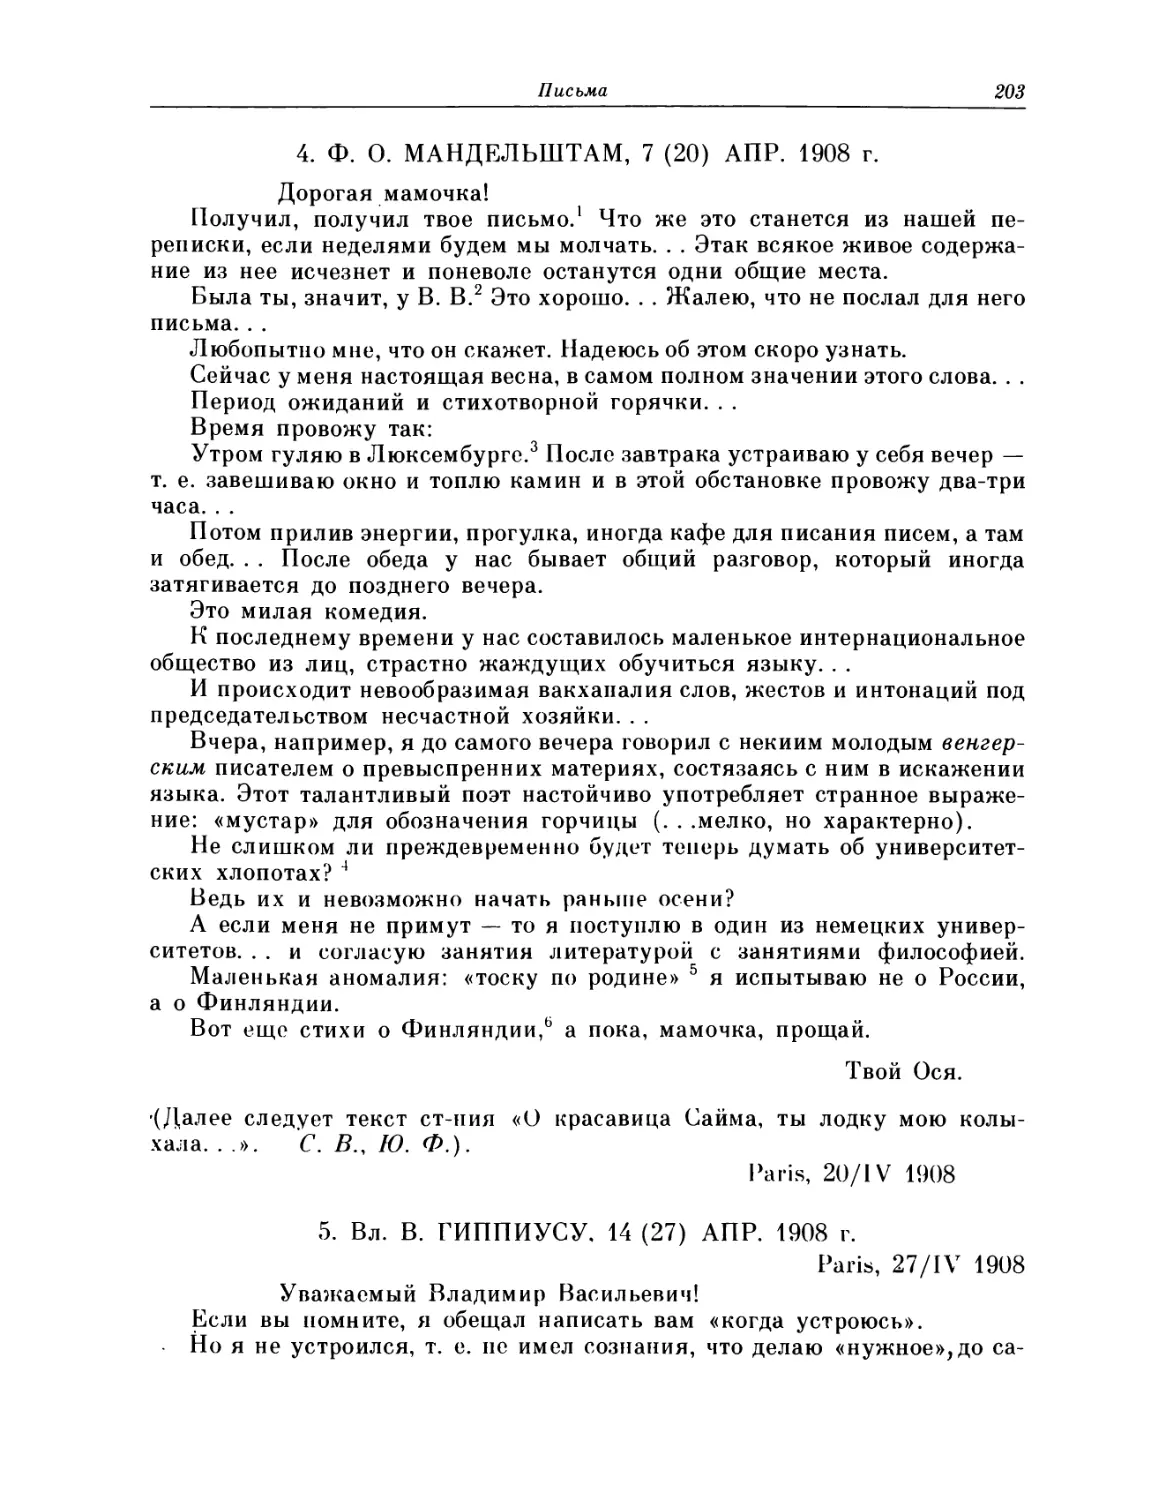 4. Ф. О. Мандельштам, 7.04.1908
5. Вл. В. Гиппиусу, 14.04.1908